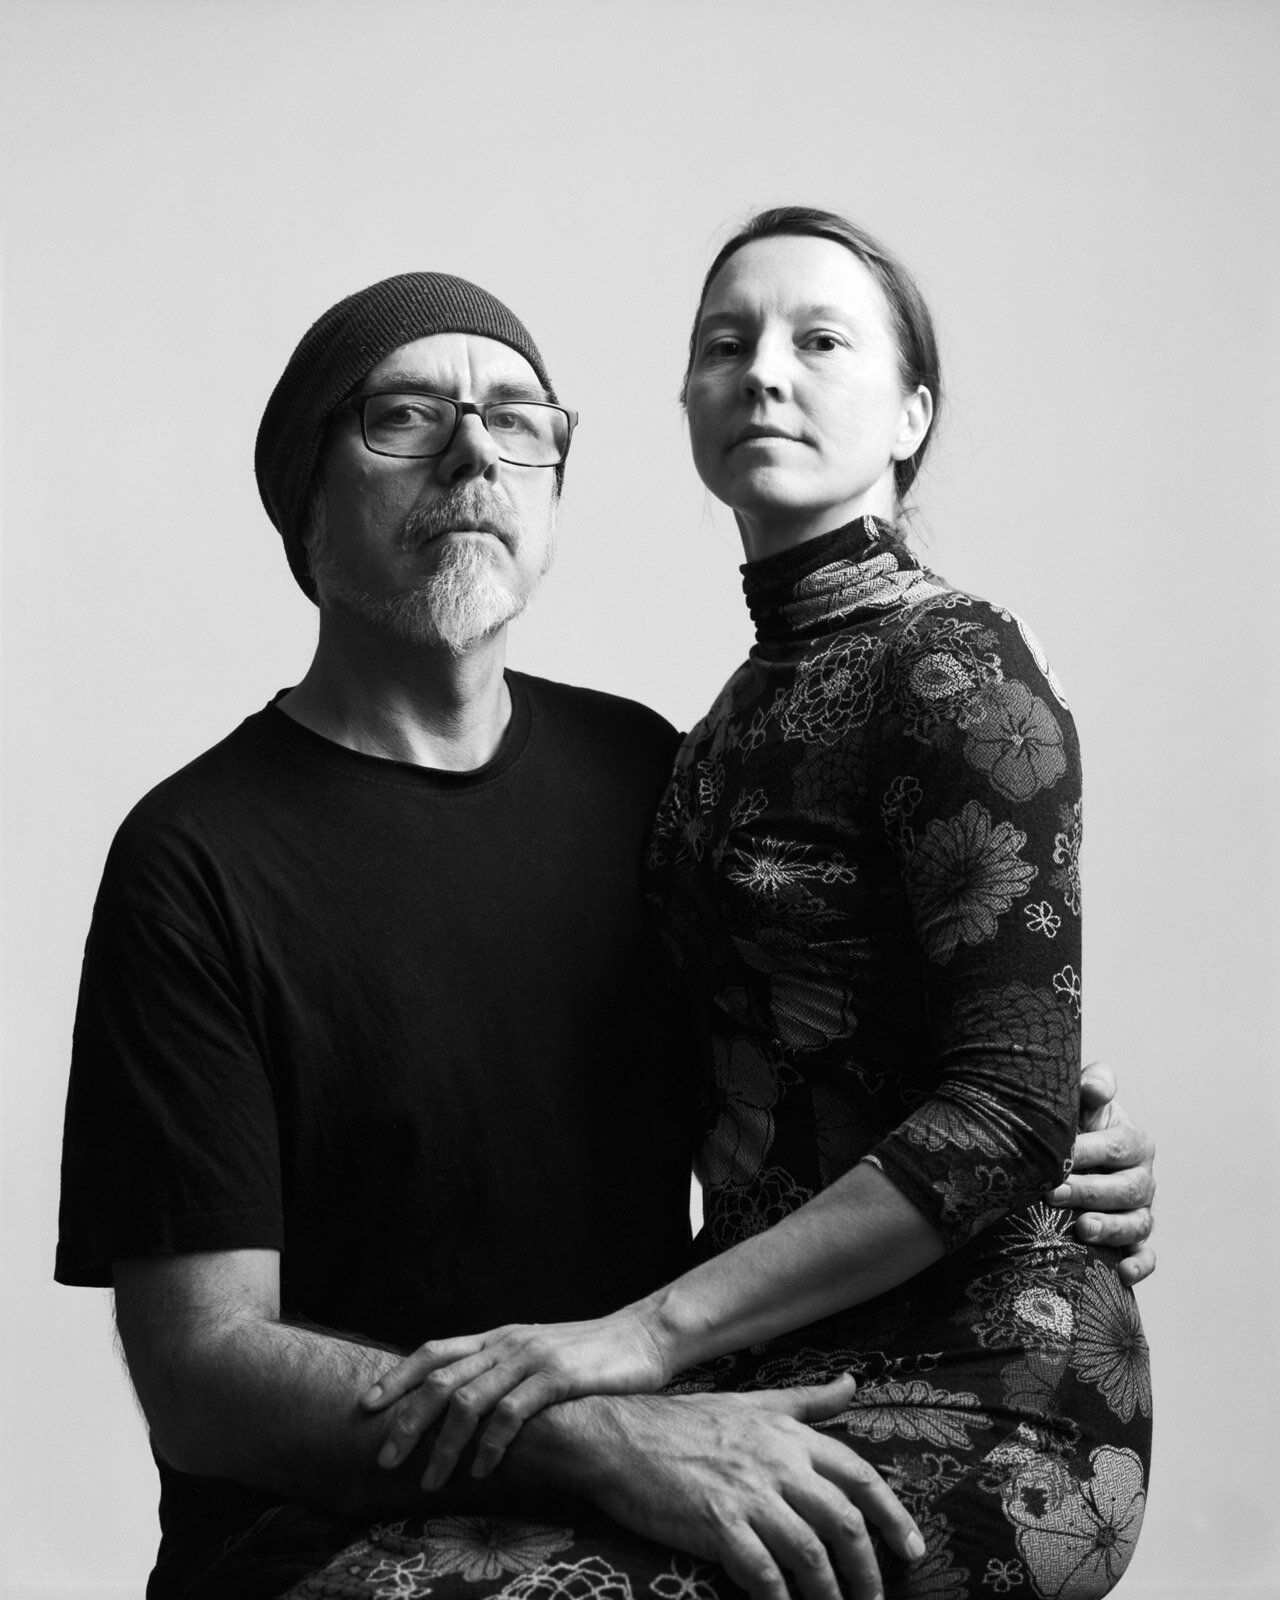  John Collingswood and Tanja Råman. 